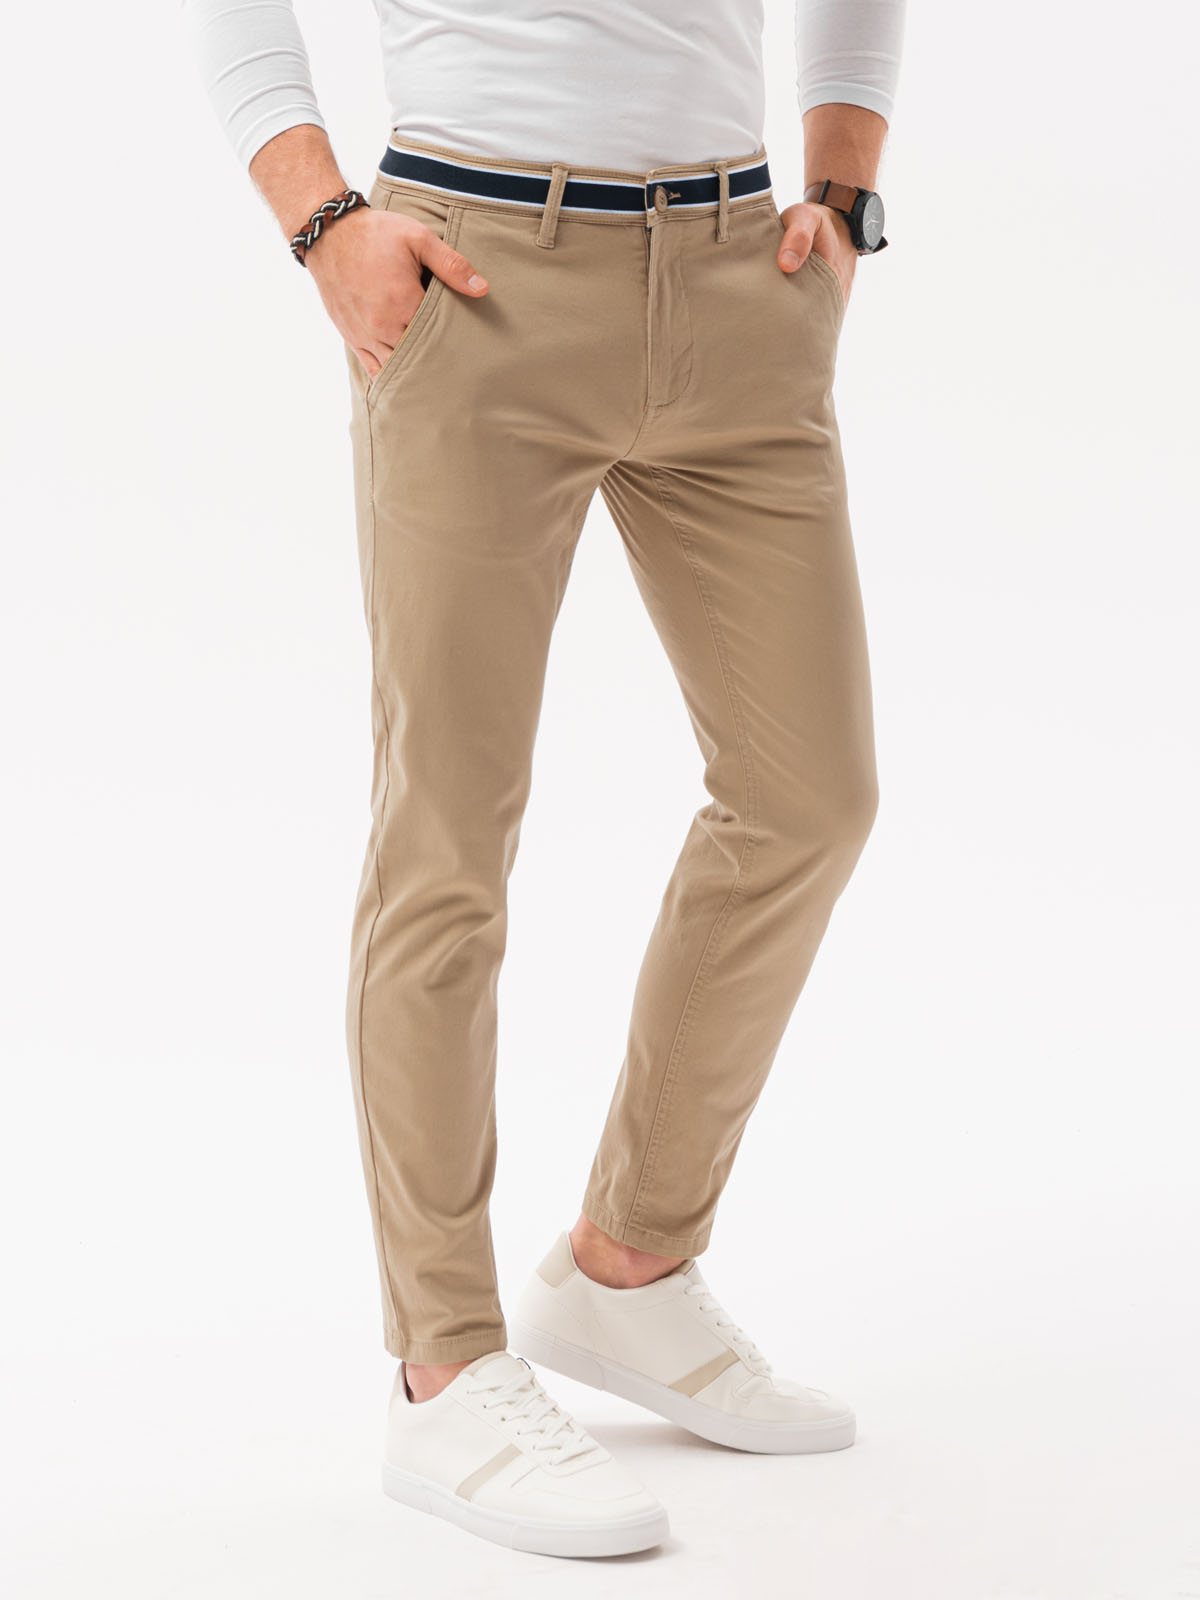 Spodnie męskie chino P156 - beżowe - S Ombre Clothing